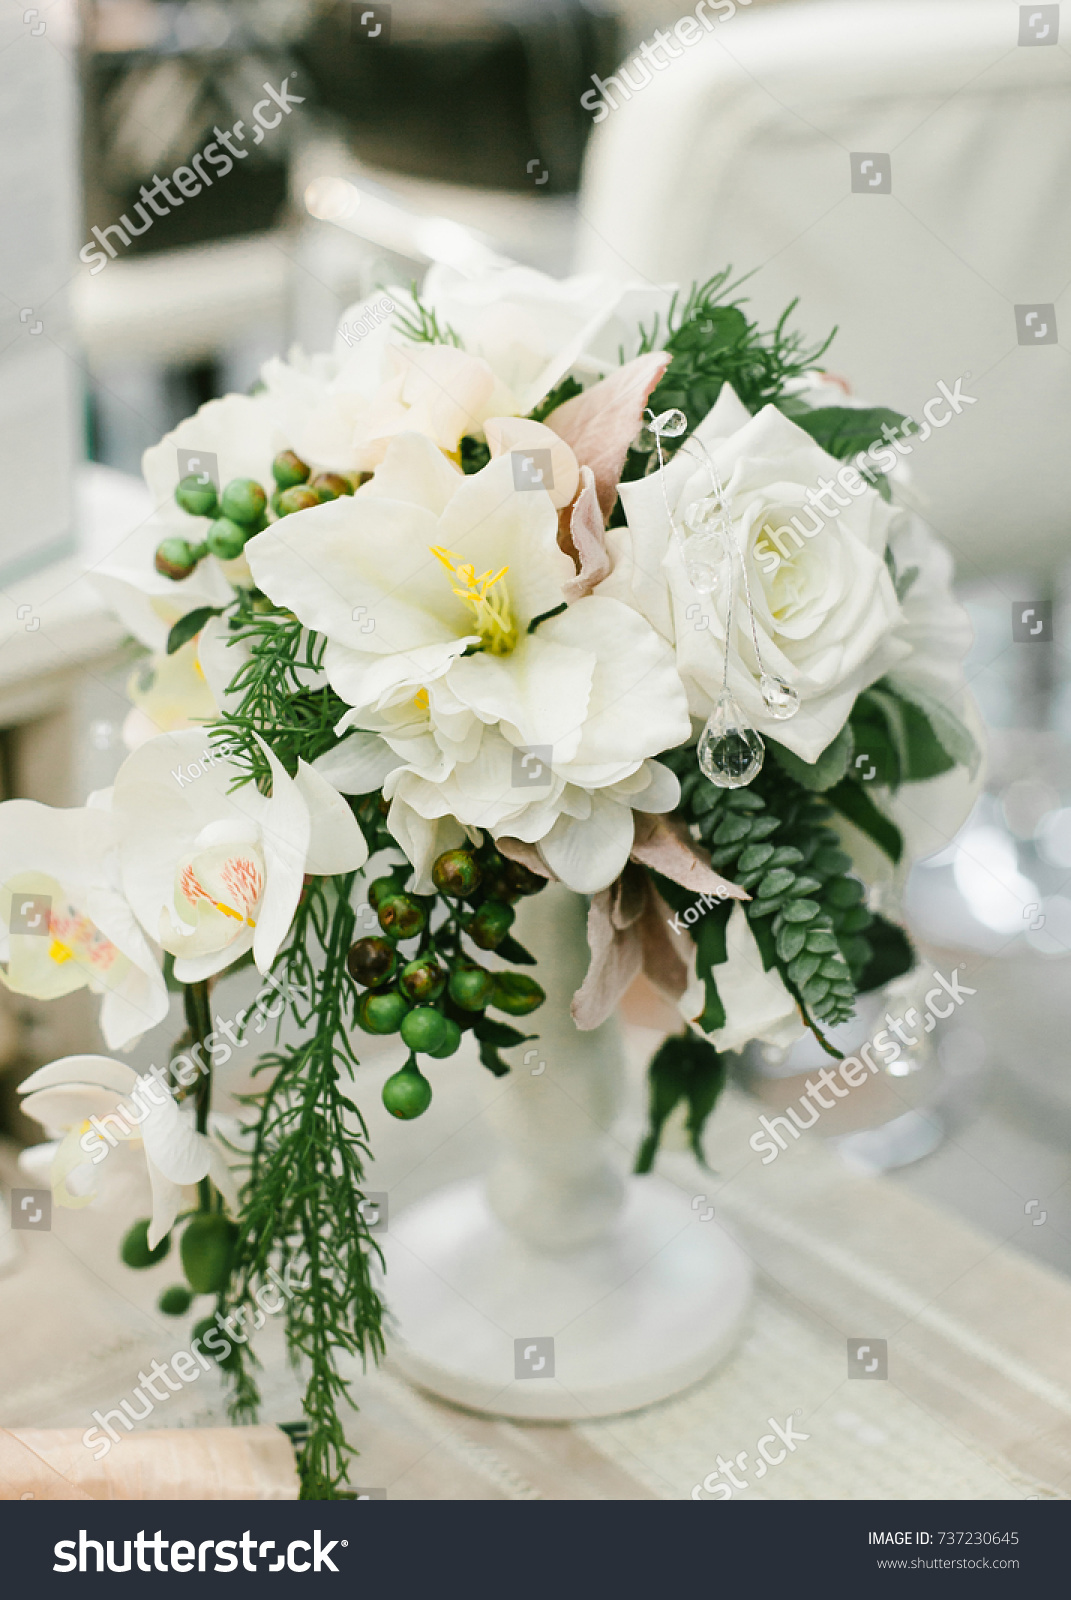 Wedding Table Centerpieces White Floral Composition Stock Photo Edit Now 737230645